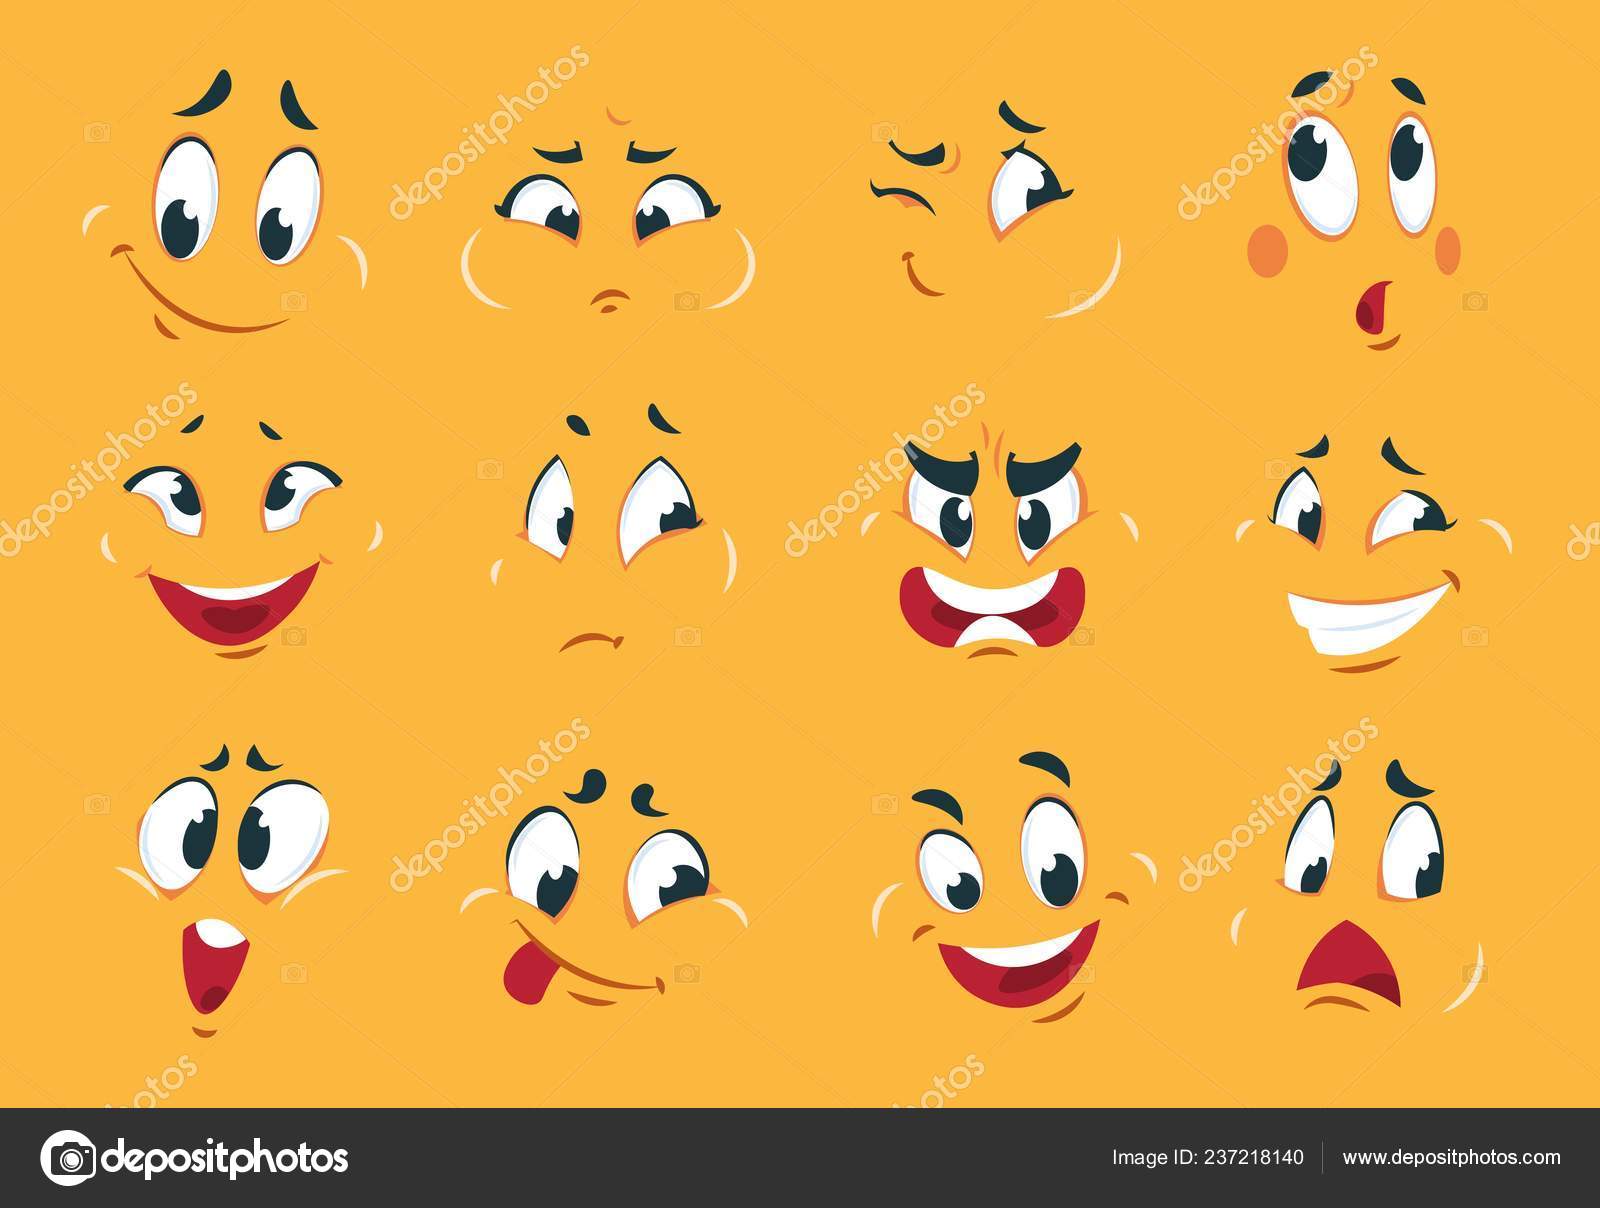 https://st4.depositphotos.com/21121724/23721/v/1600/depositphotos_237218140-stock-illustration-funny-cartoon-faces-angry-character.jpg